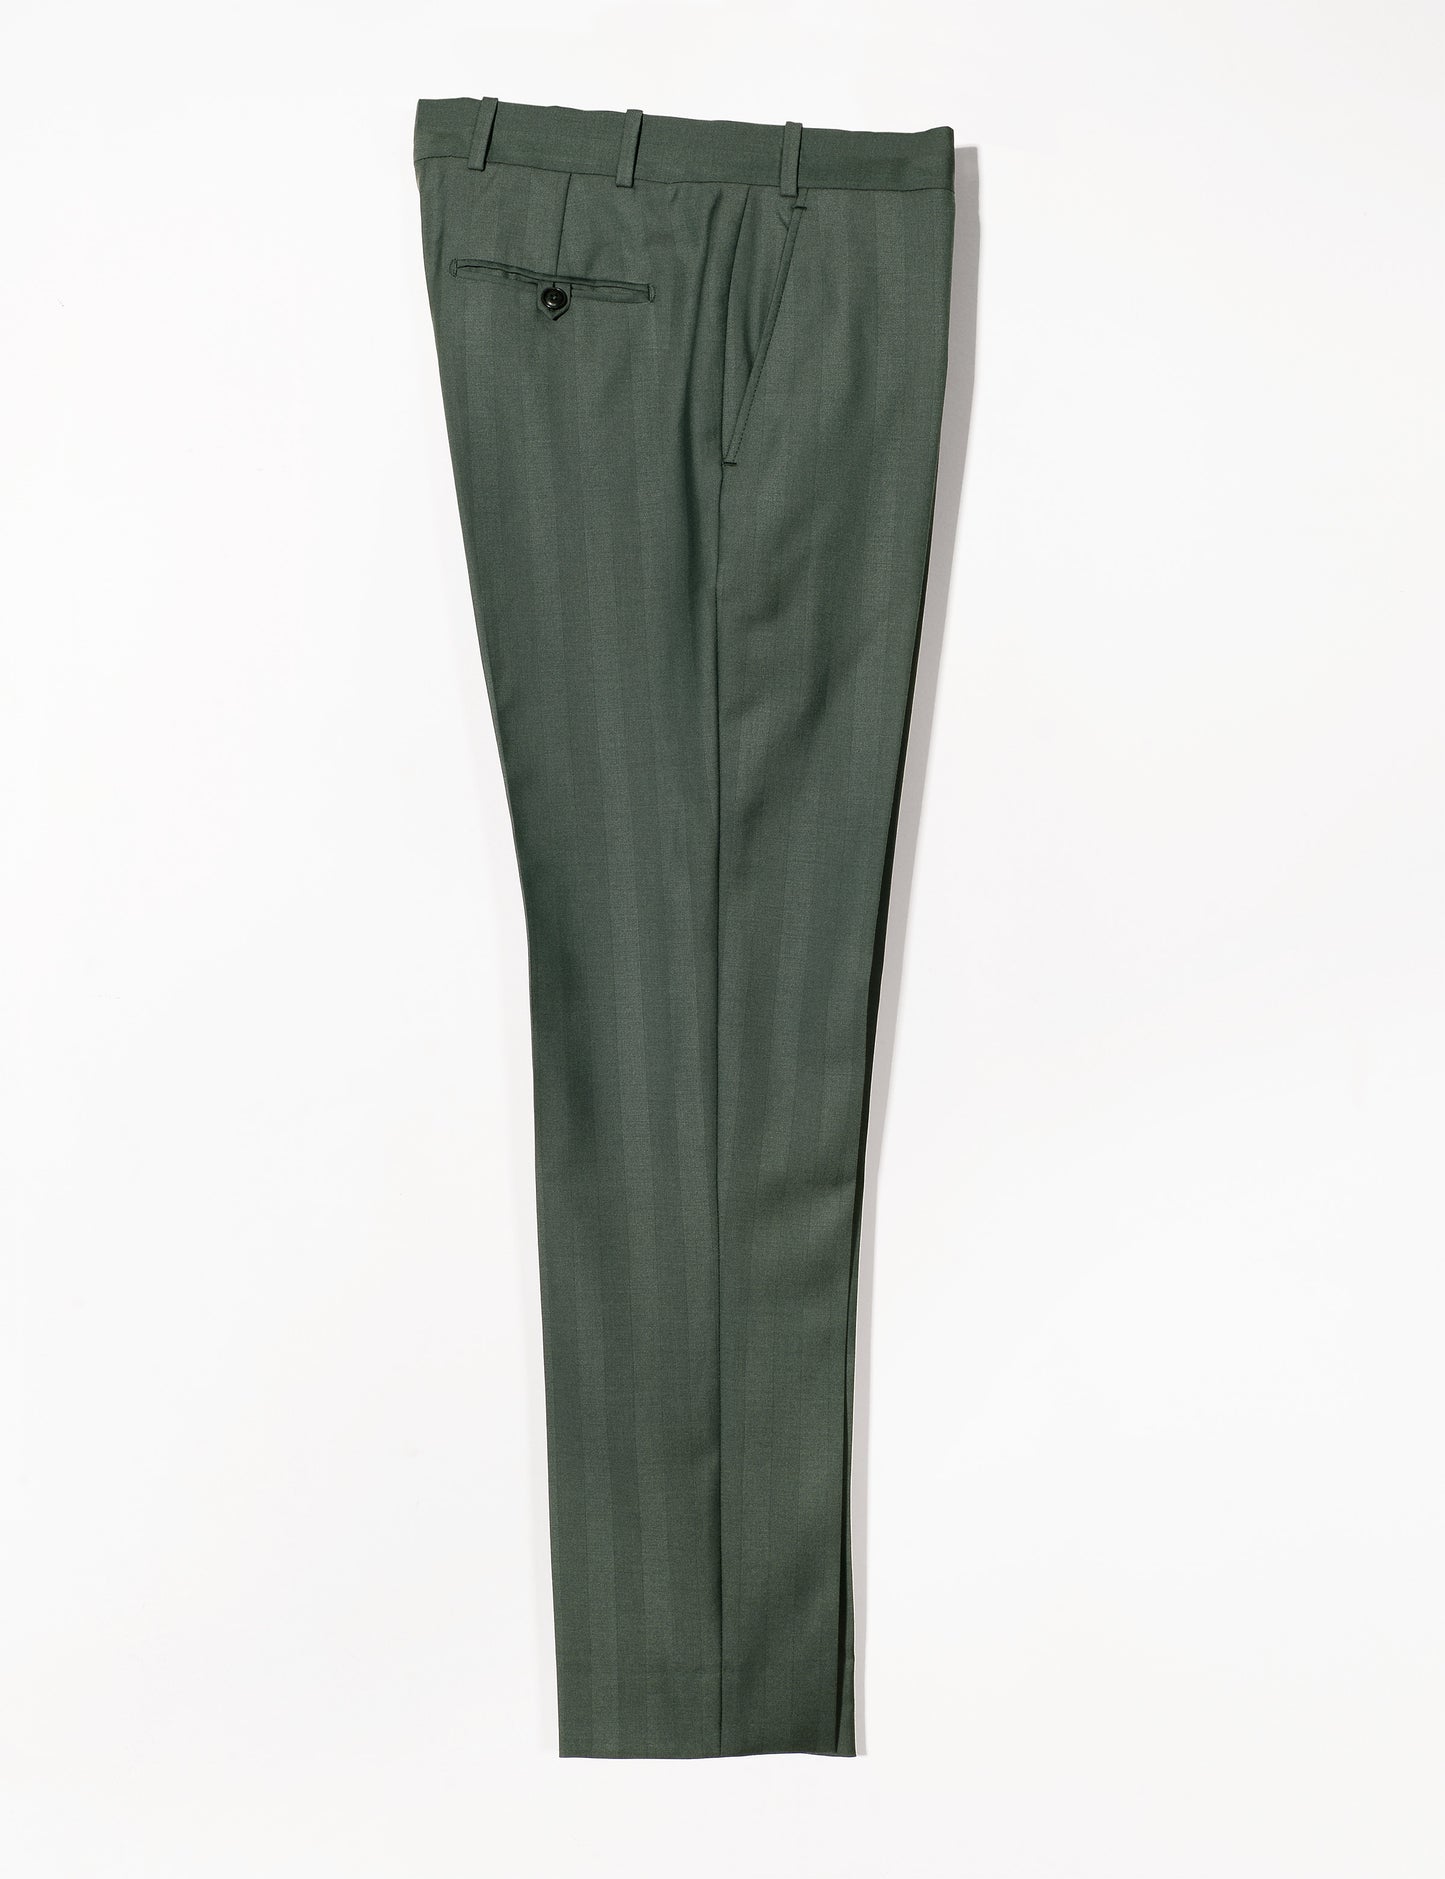 FINAL SALE: BKT50 Tailored Trousers in Wool Herringbone - Cyprus